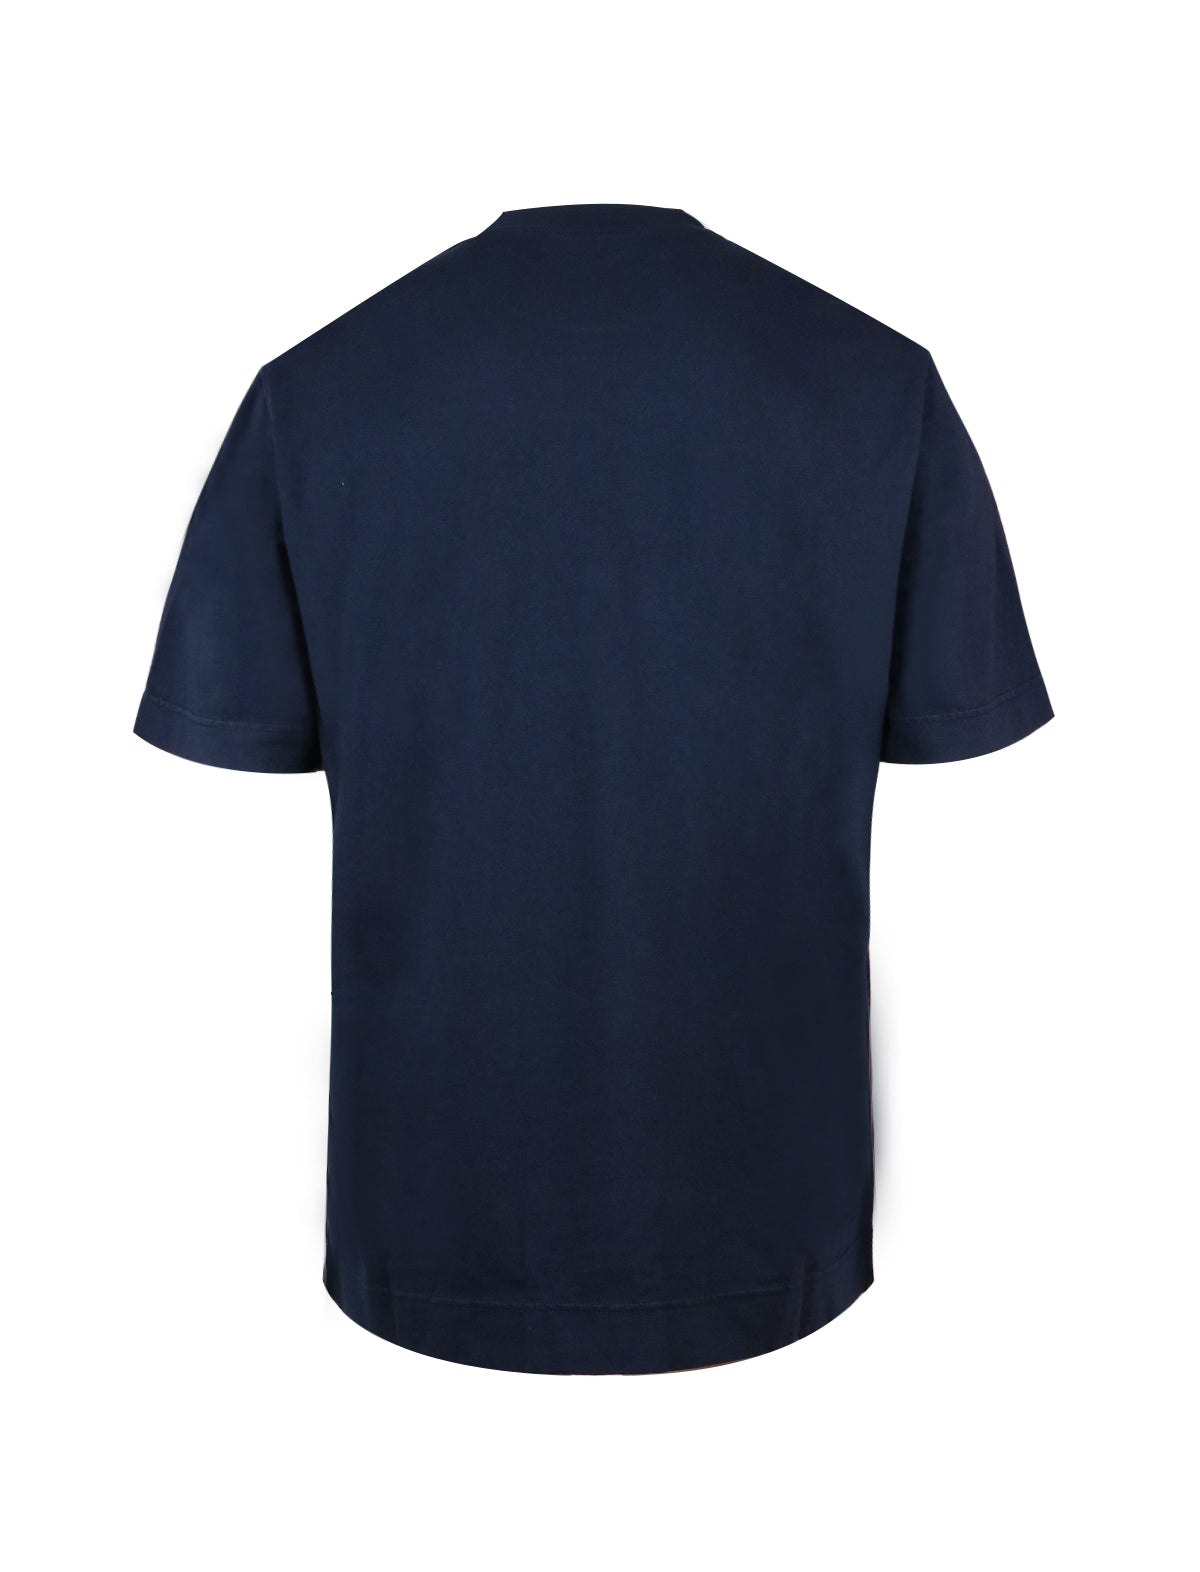 CIRCOLO 1901 Cotton Jersey T-Shirt in Blue Black